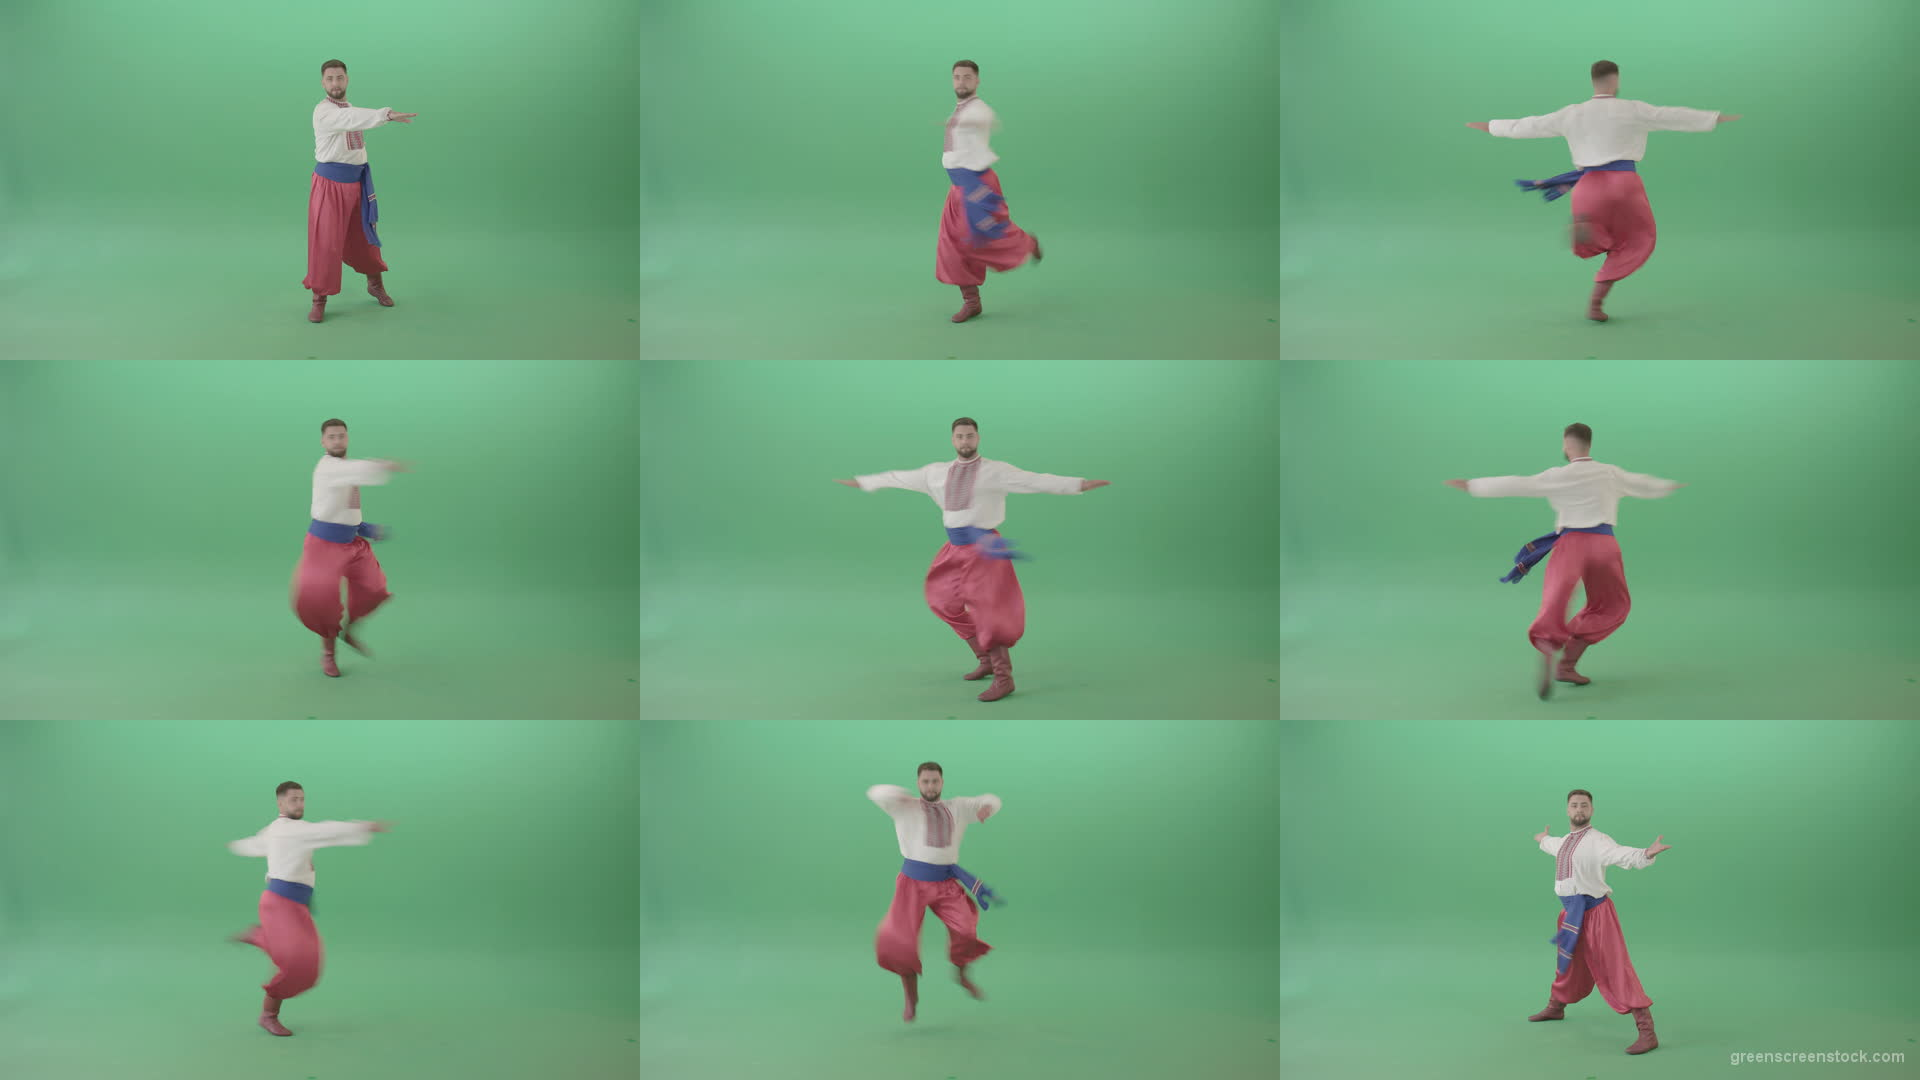 Folk-social-ethno-ukraine-dance-by-UA-Cossack-isolated-on-Green-Screen-4K-Video-Footage-1920 Green Screen Stock